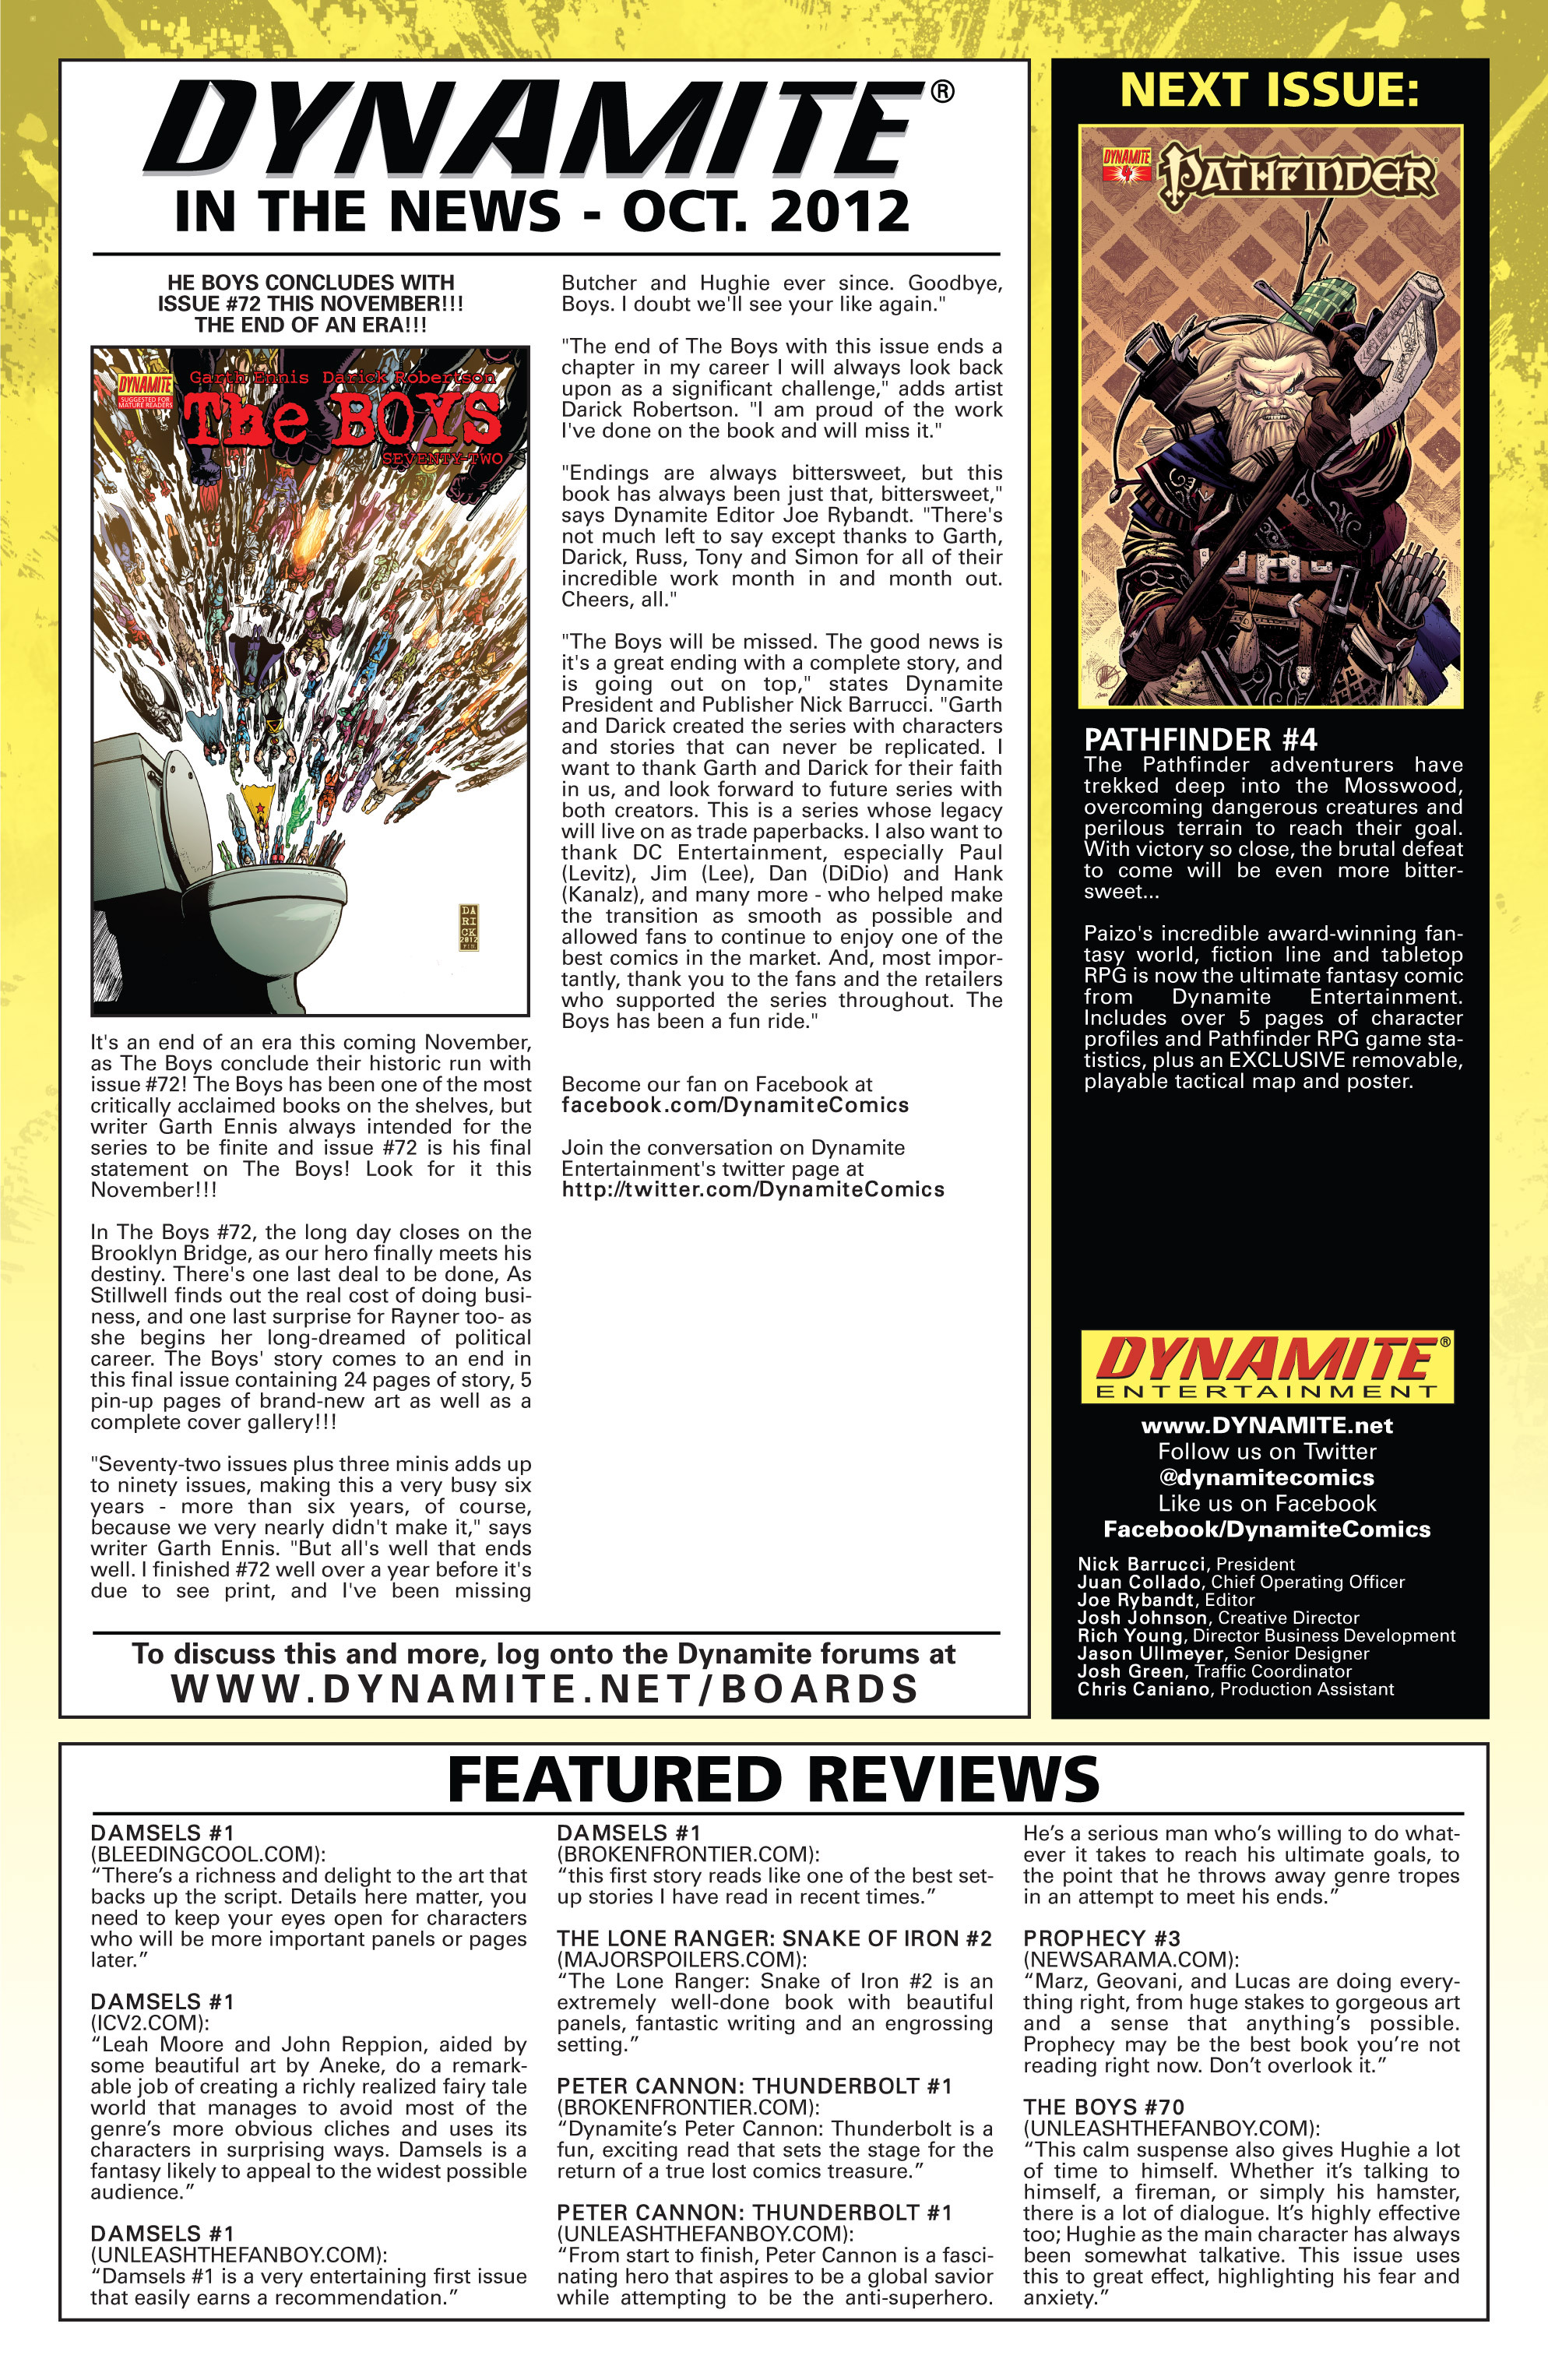 Read online Pathfinder comic -  Issue #3 - 34